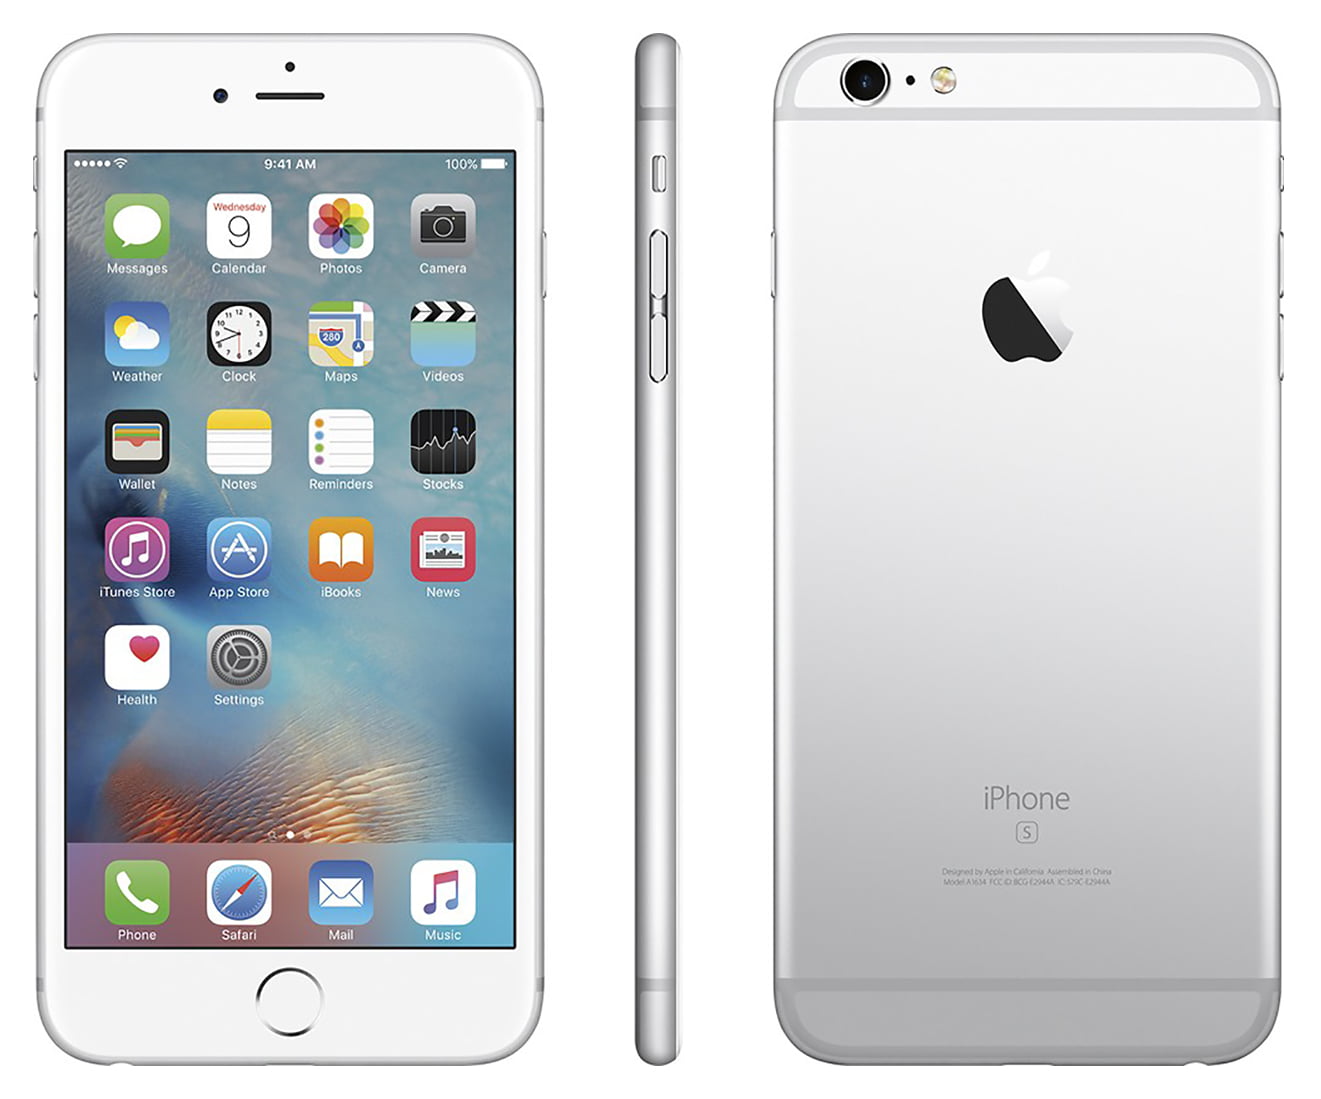 Apple iPhone 6s Plus 32GB Unlocked GSM - Space Gray (Used) 